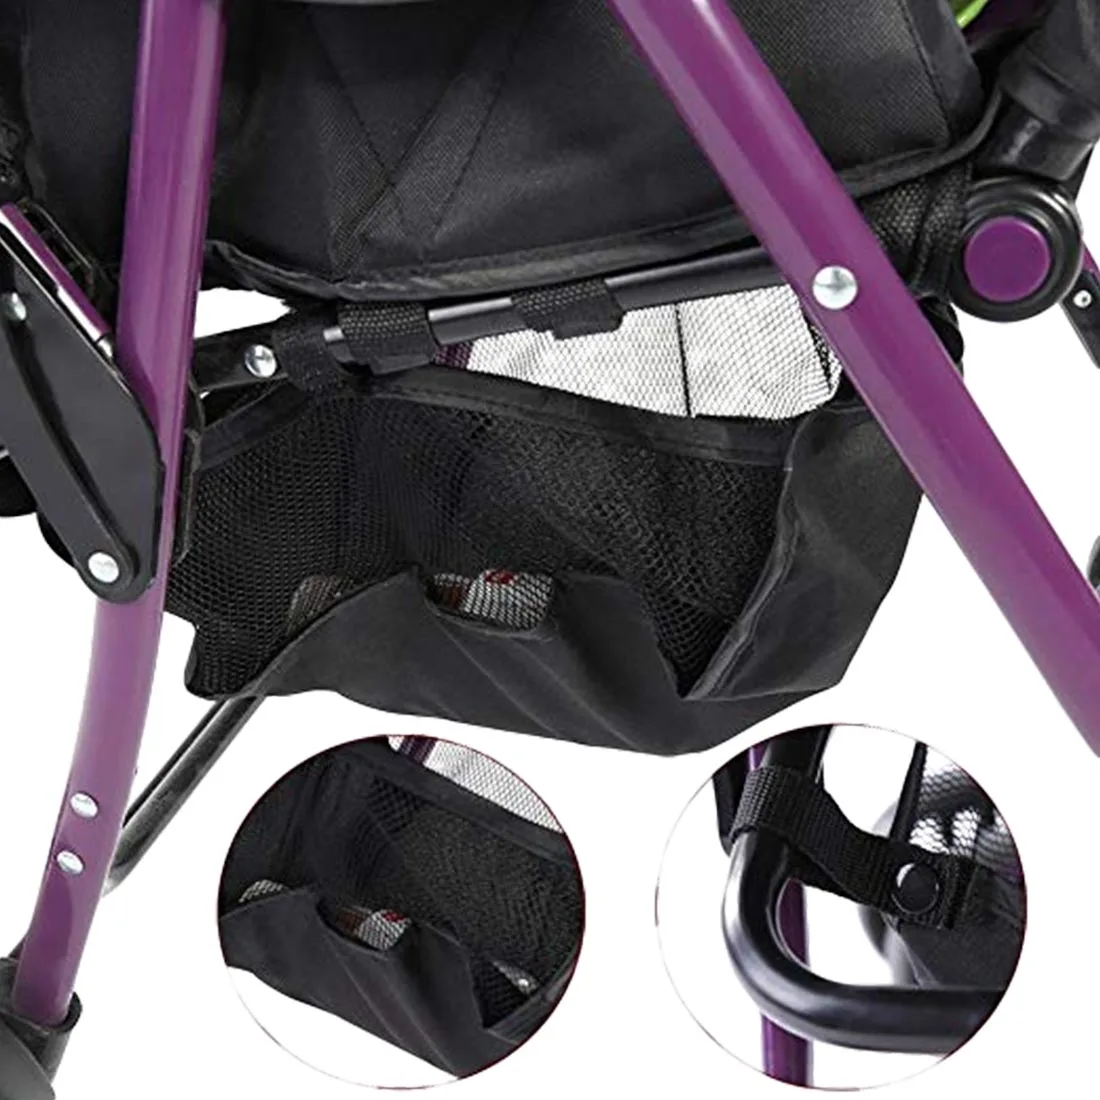 Корзина для коляски сумка для хранения Универсальная Портативная корзина для покупок уход за ребенком, младенец аксессуары для коляски